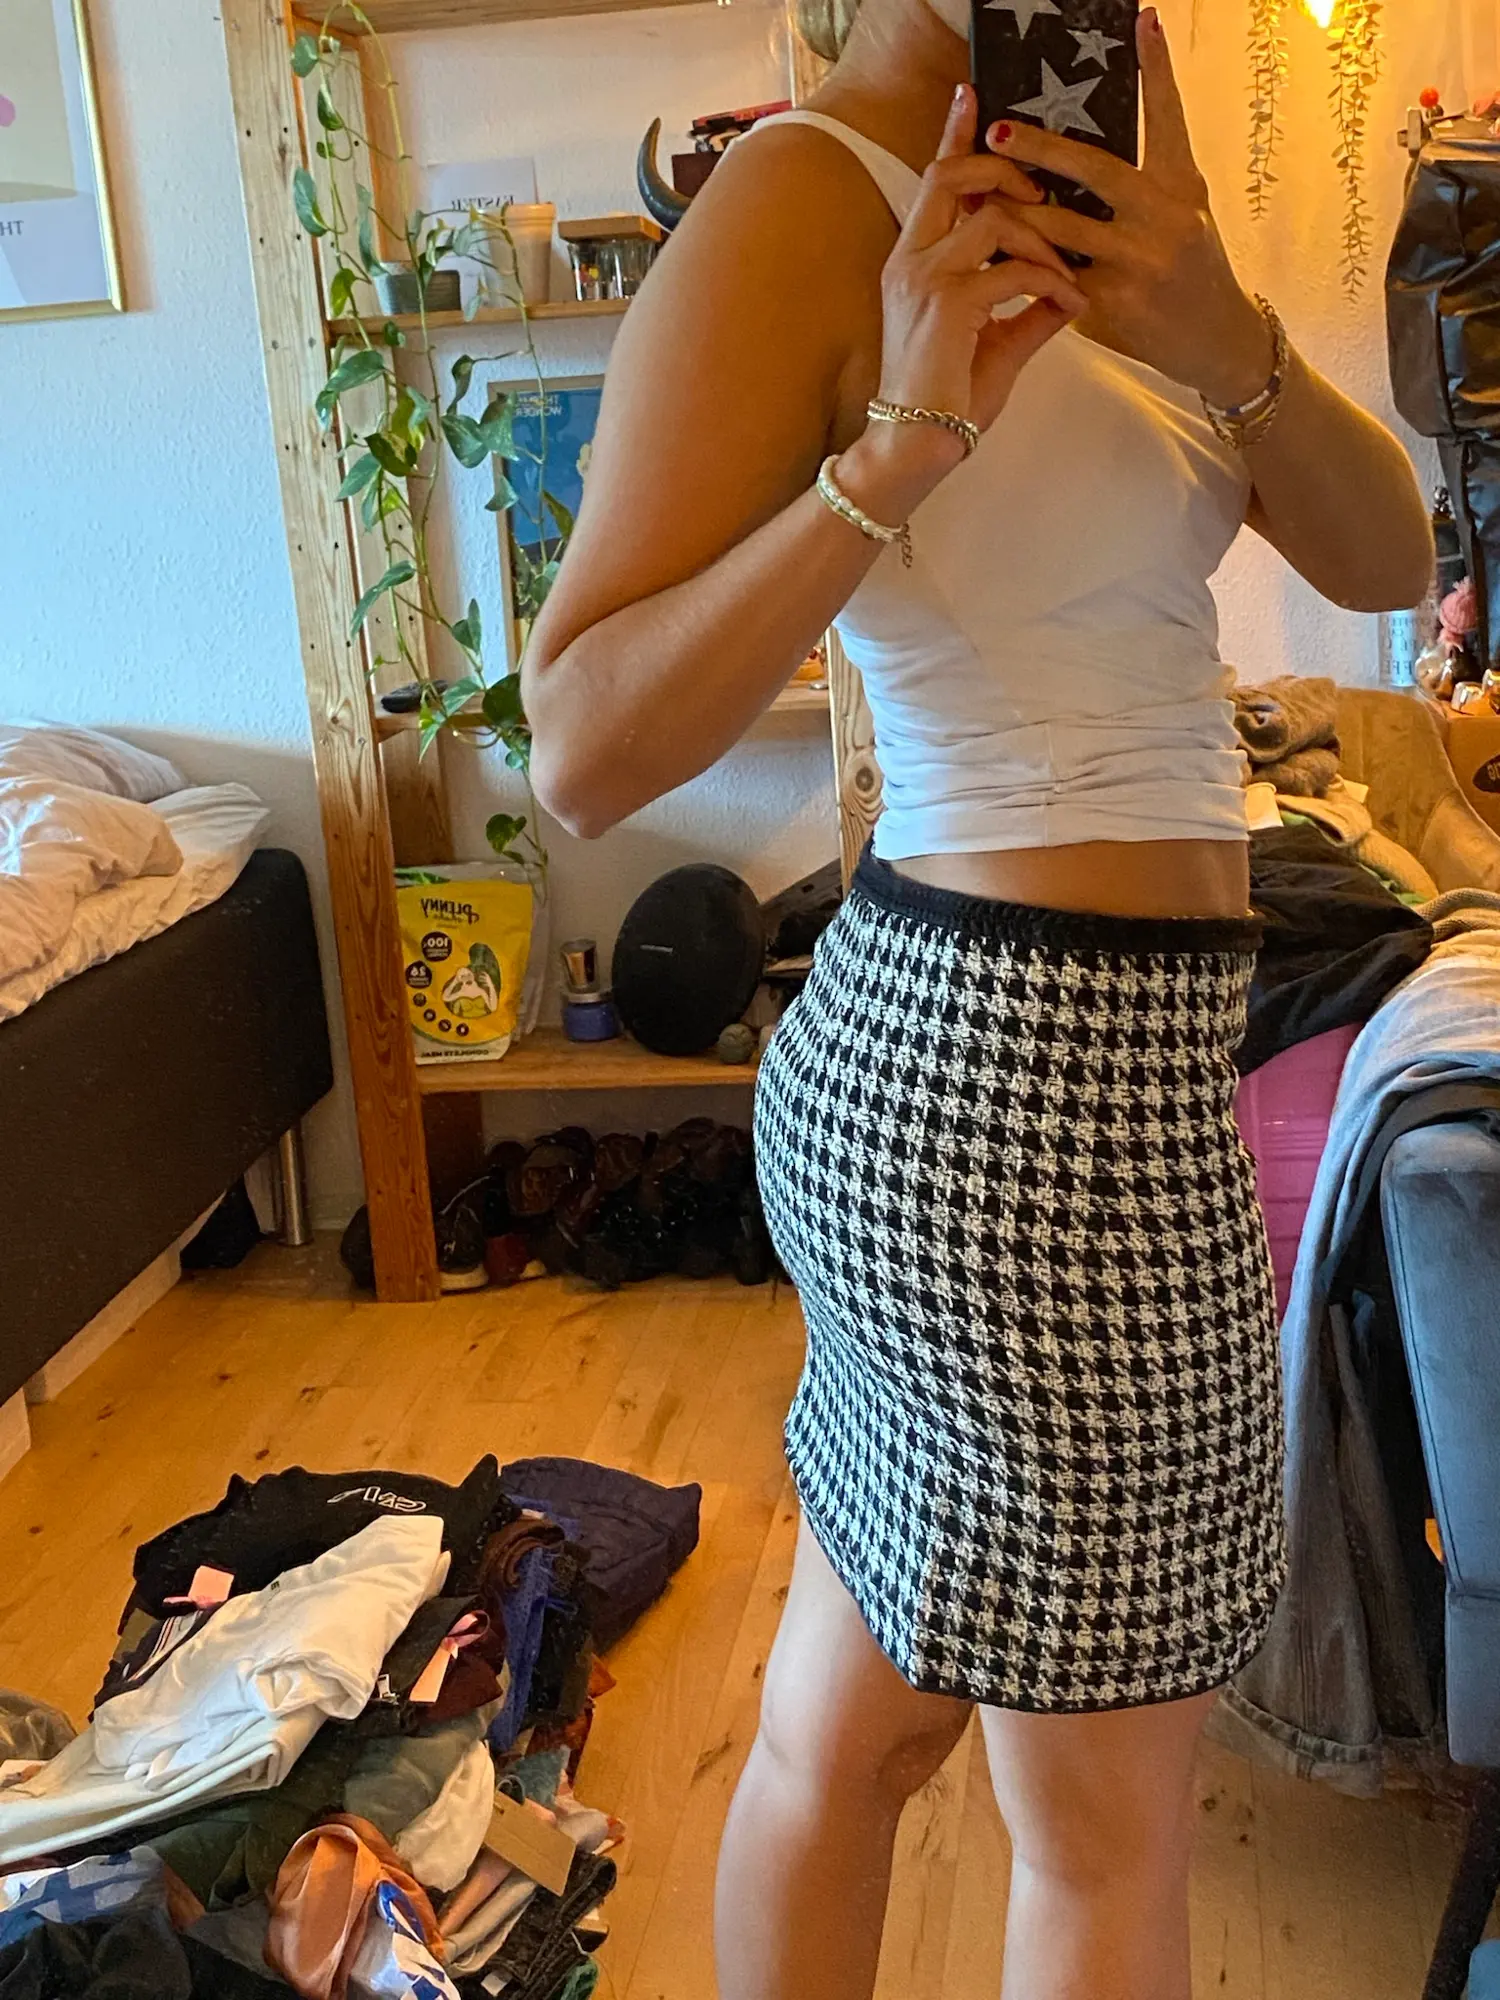 Zara nederdel